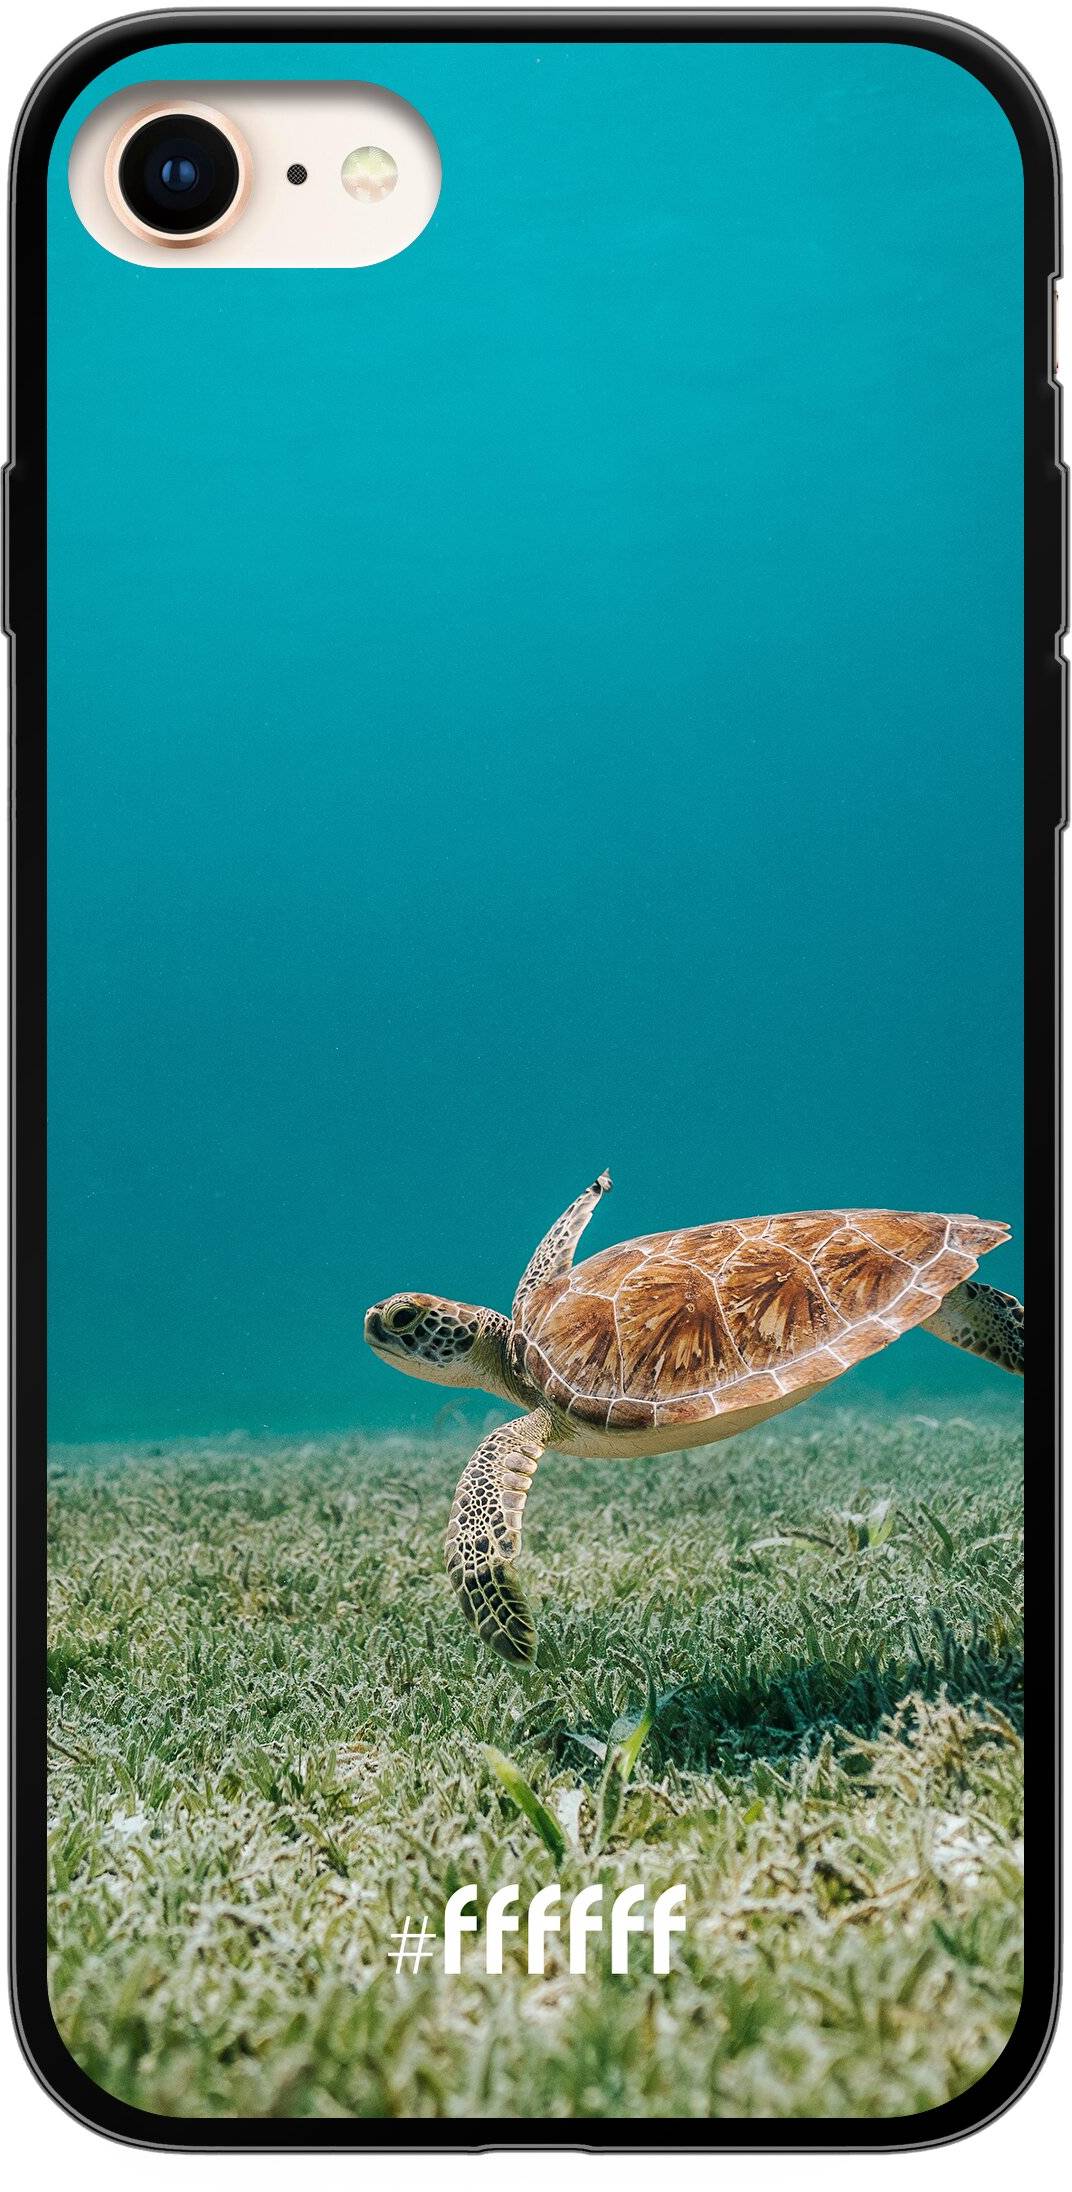 Turtle iPhone 7